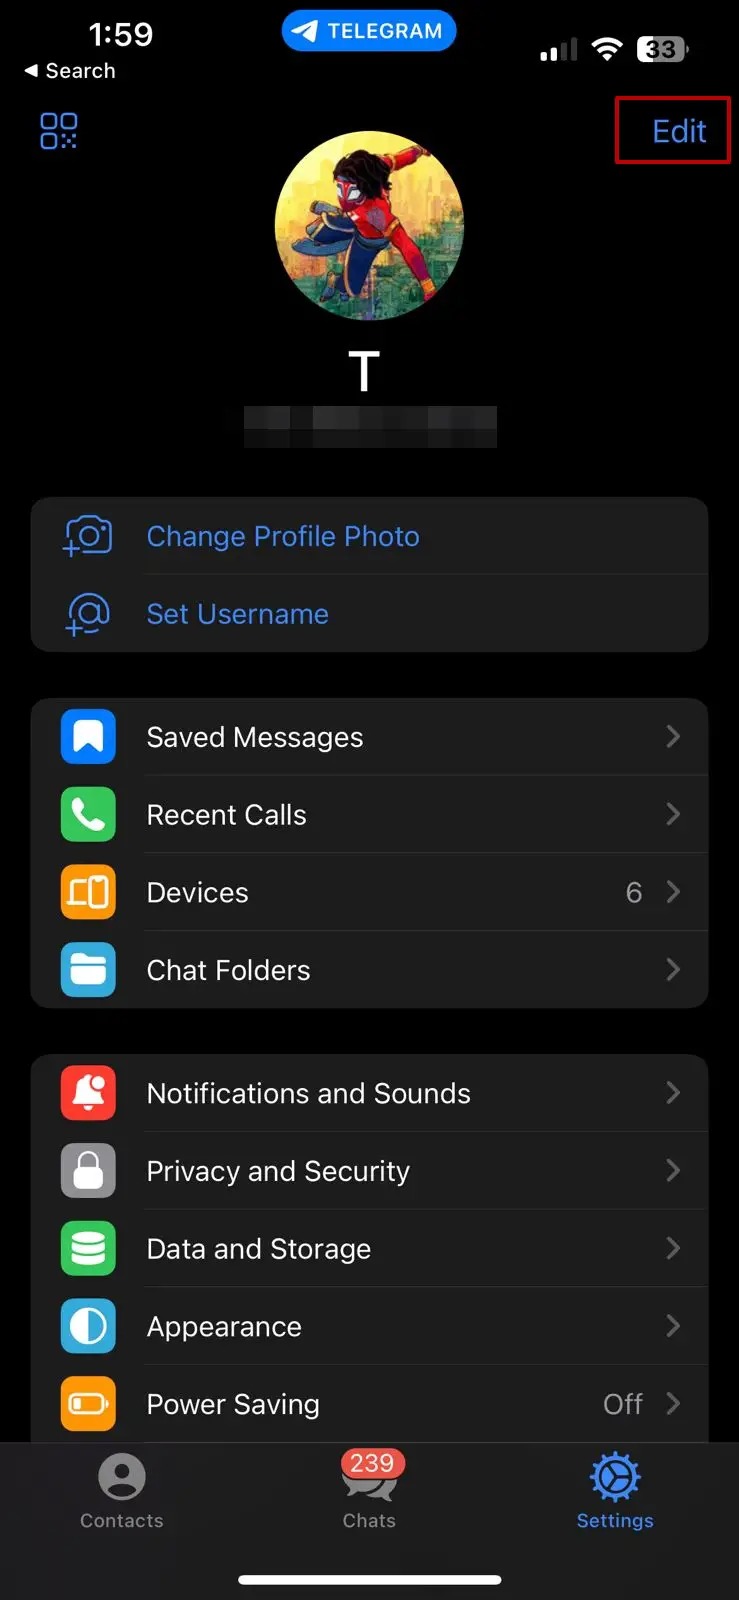 Telegram iOS DP Edit Option